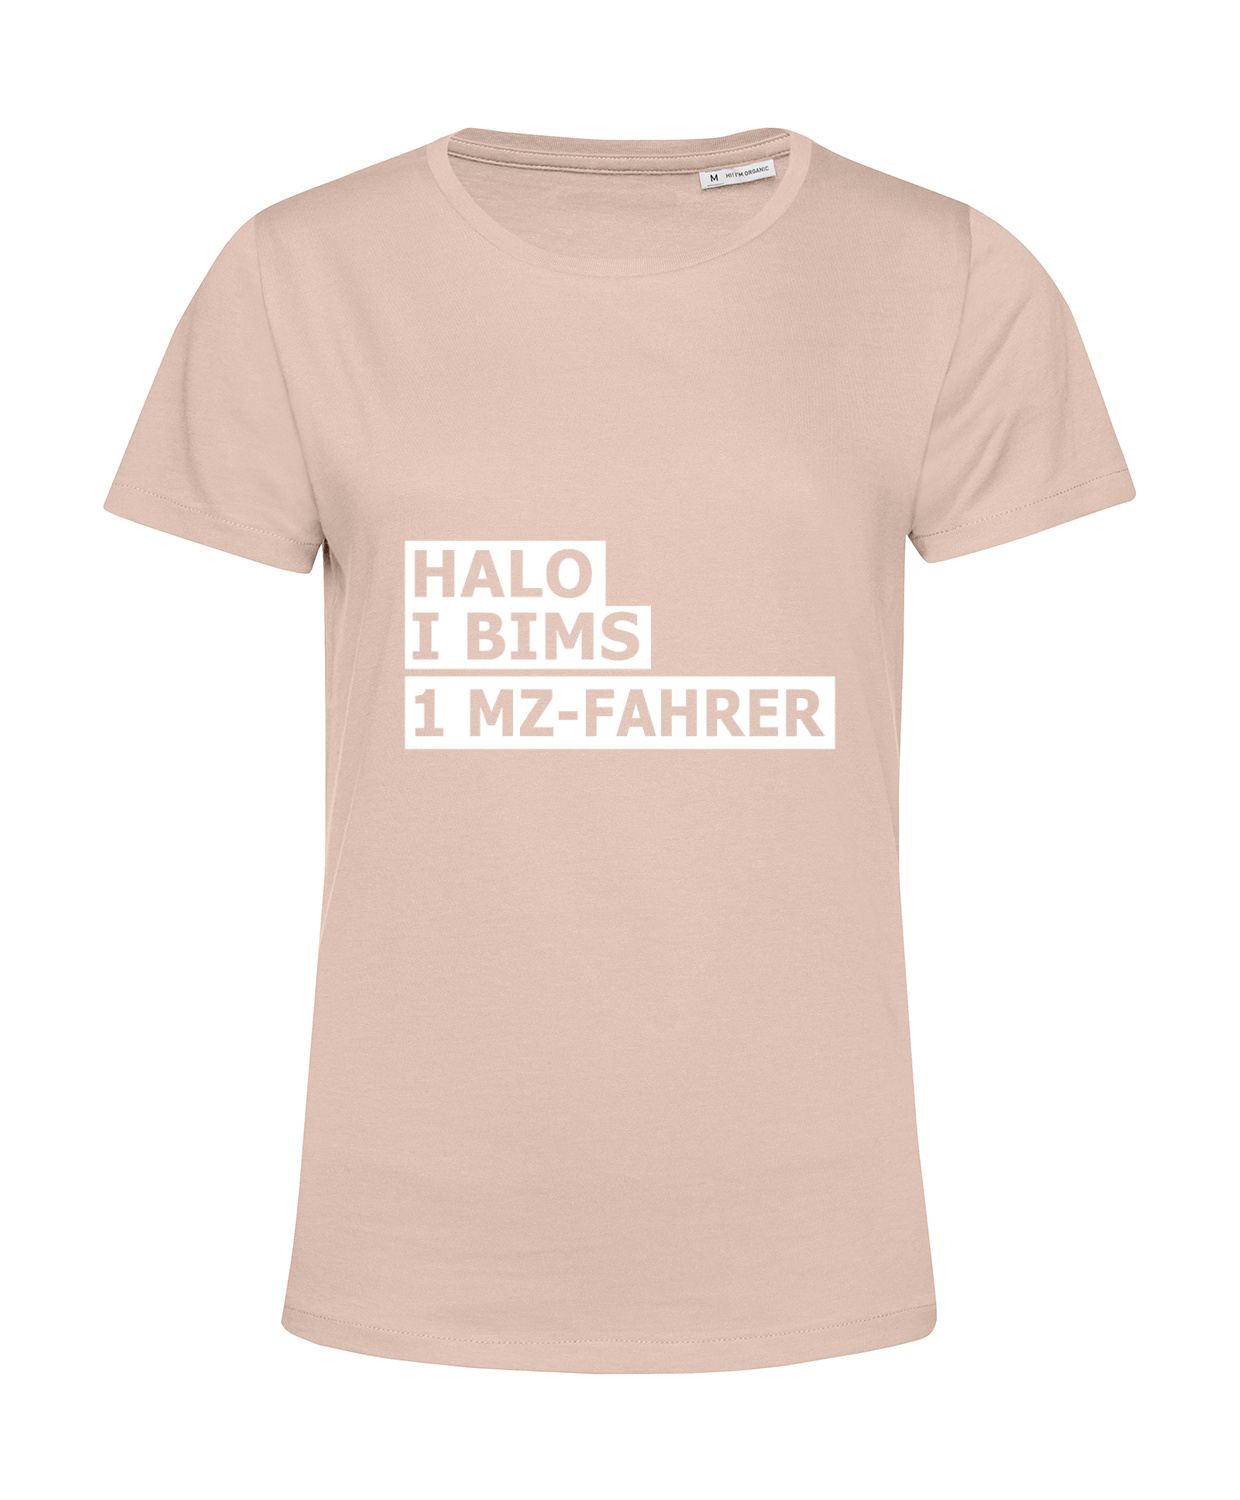 Nachhaltiges T-Shirt Damen 2Takter - Halo I bims 1 MZ-Fahrer